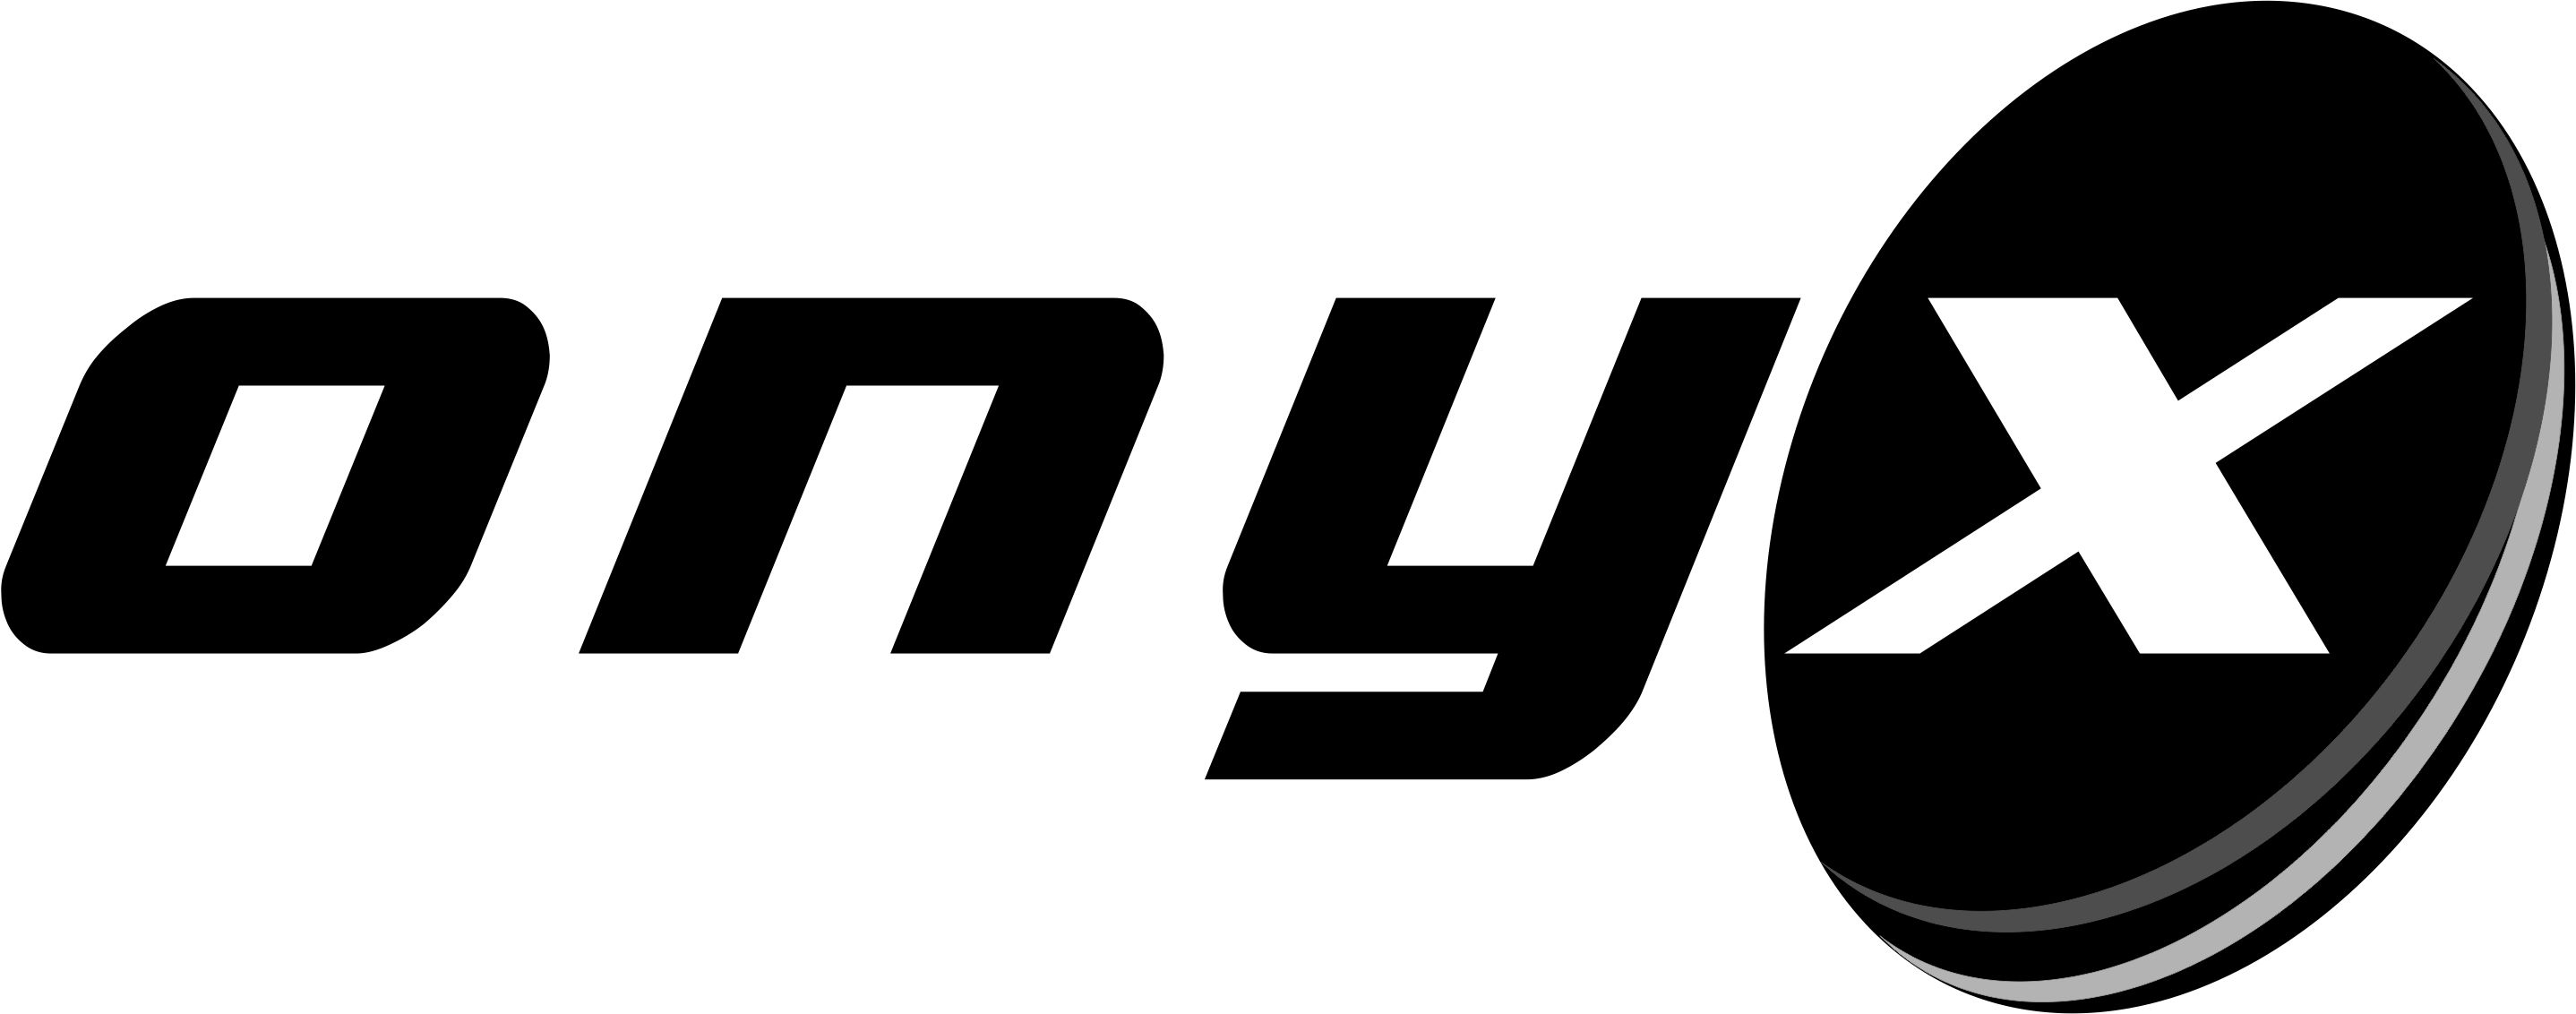 ONYX Event Management Limited
Company Logo